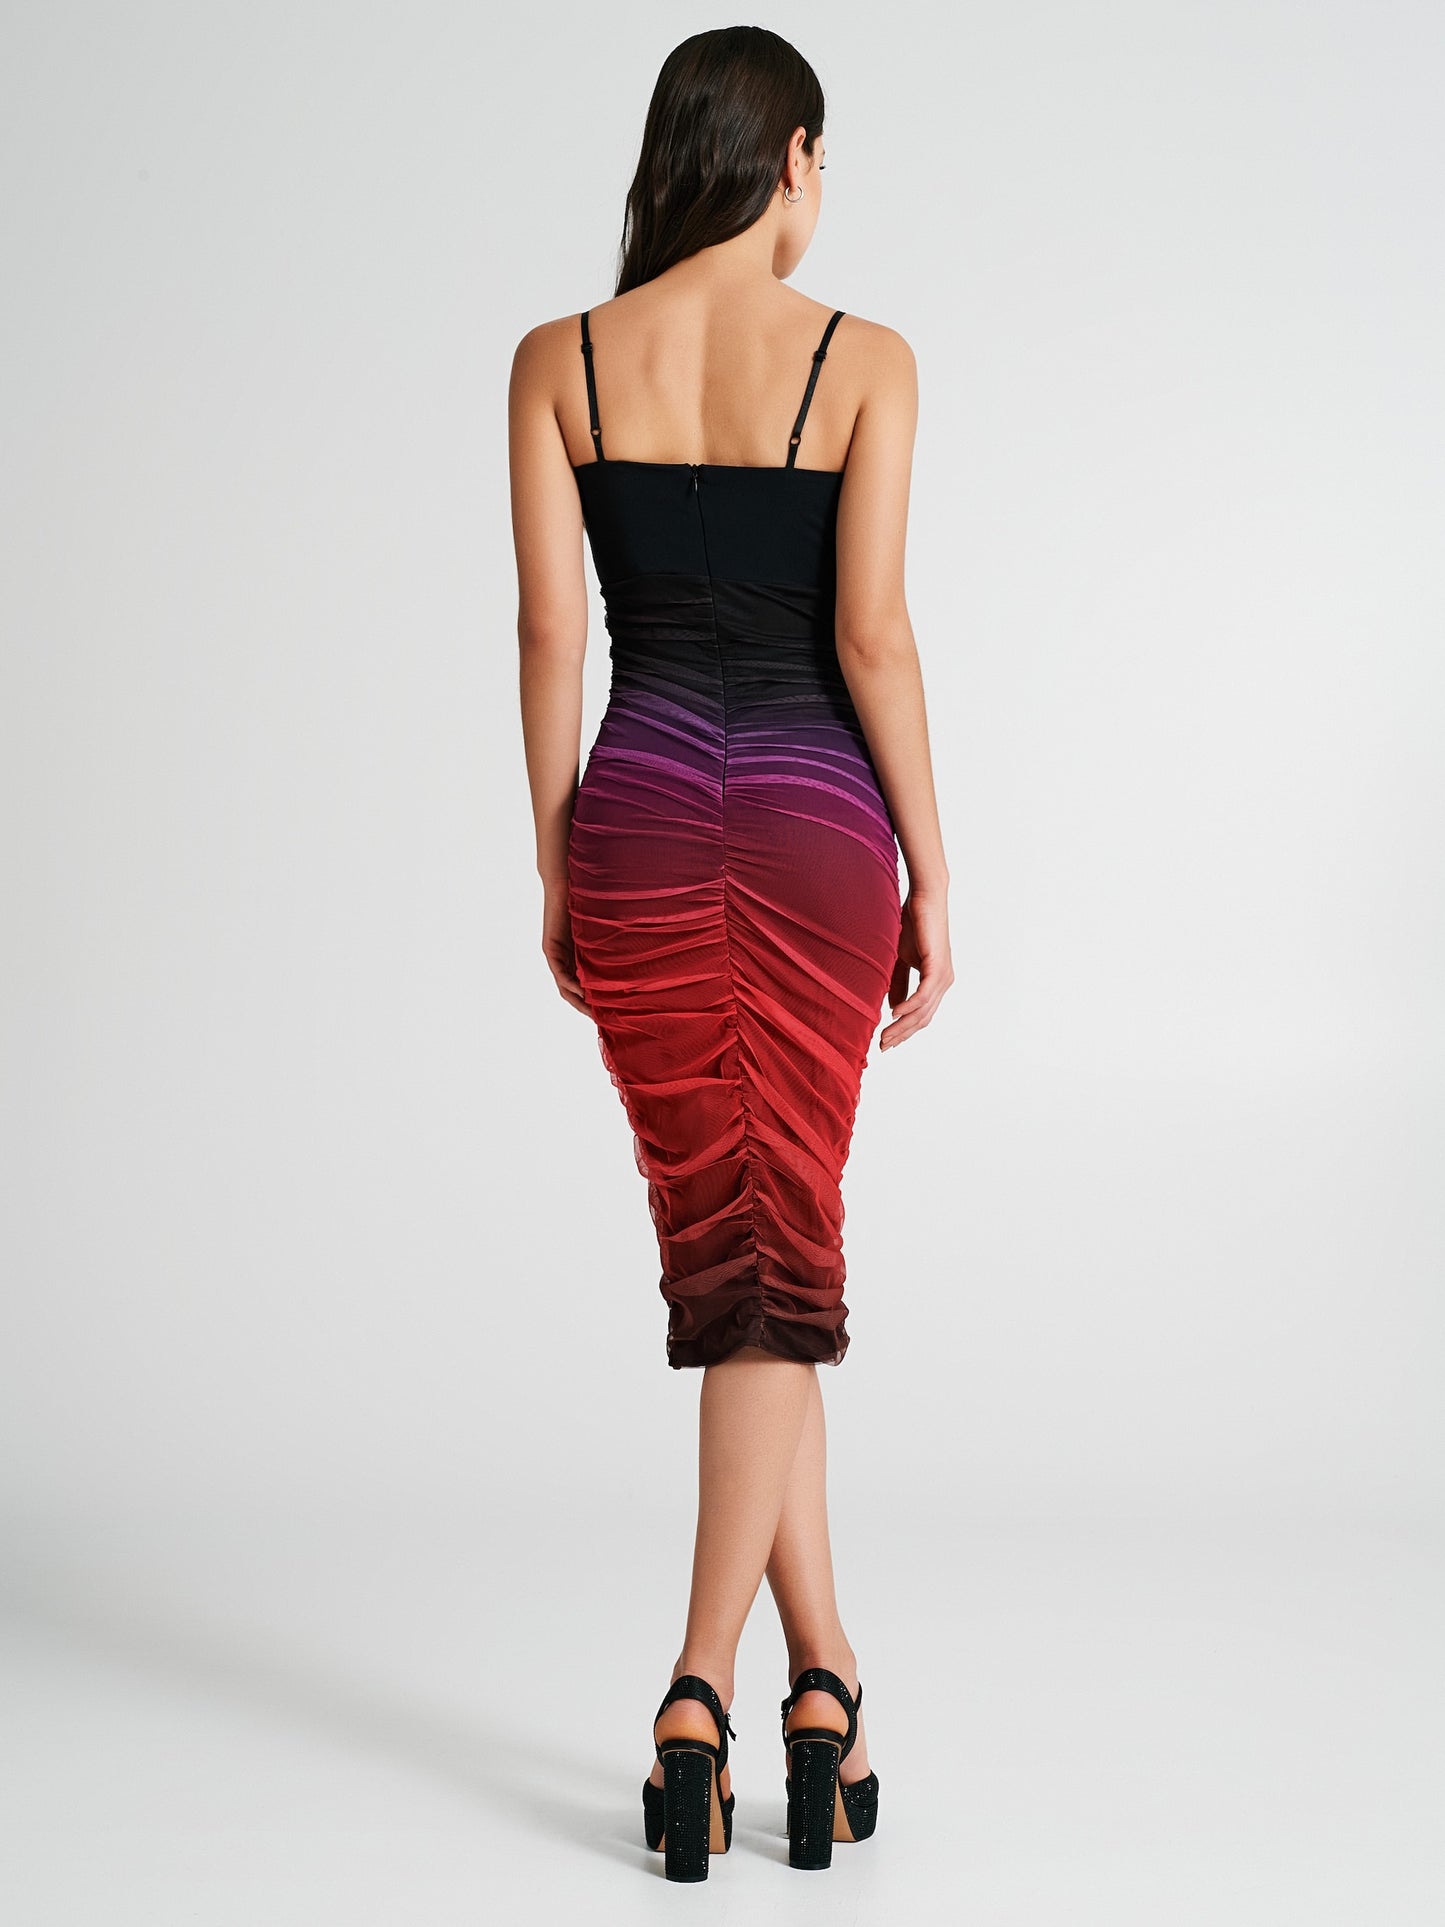 Multicolour sheath dress